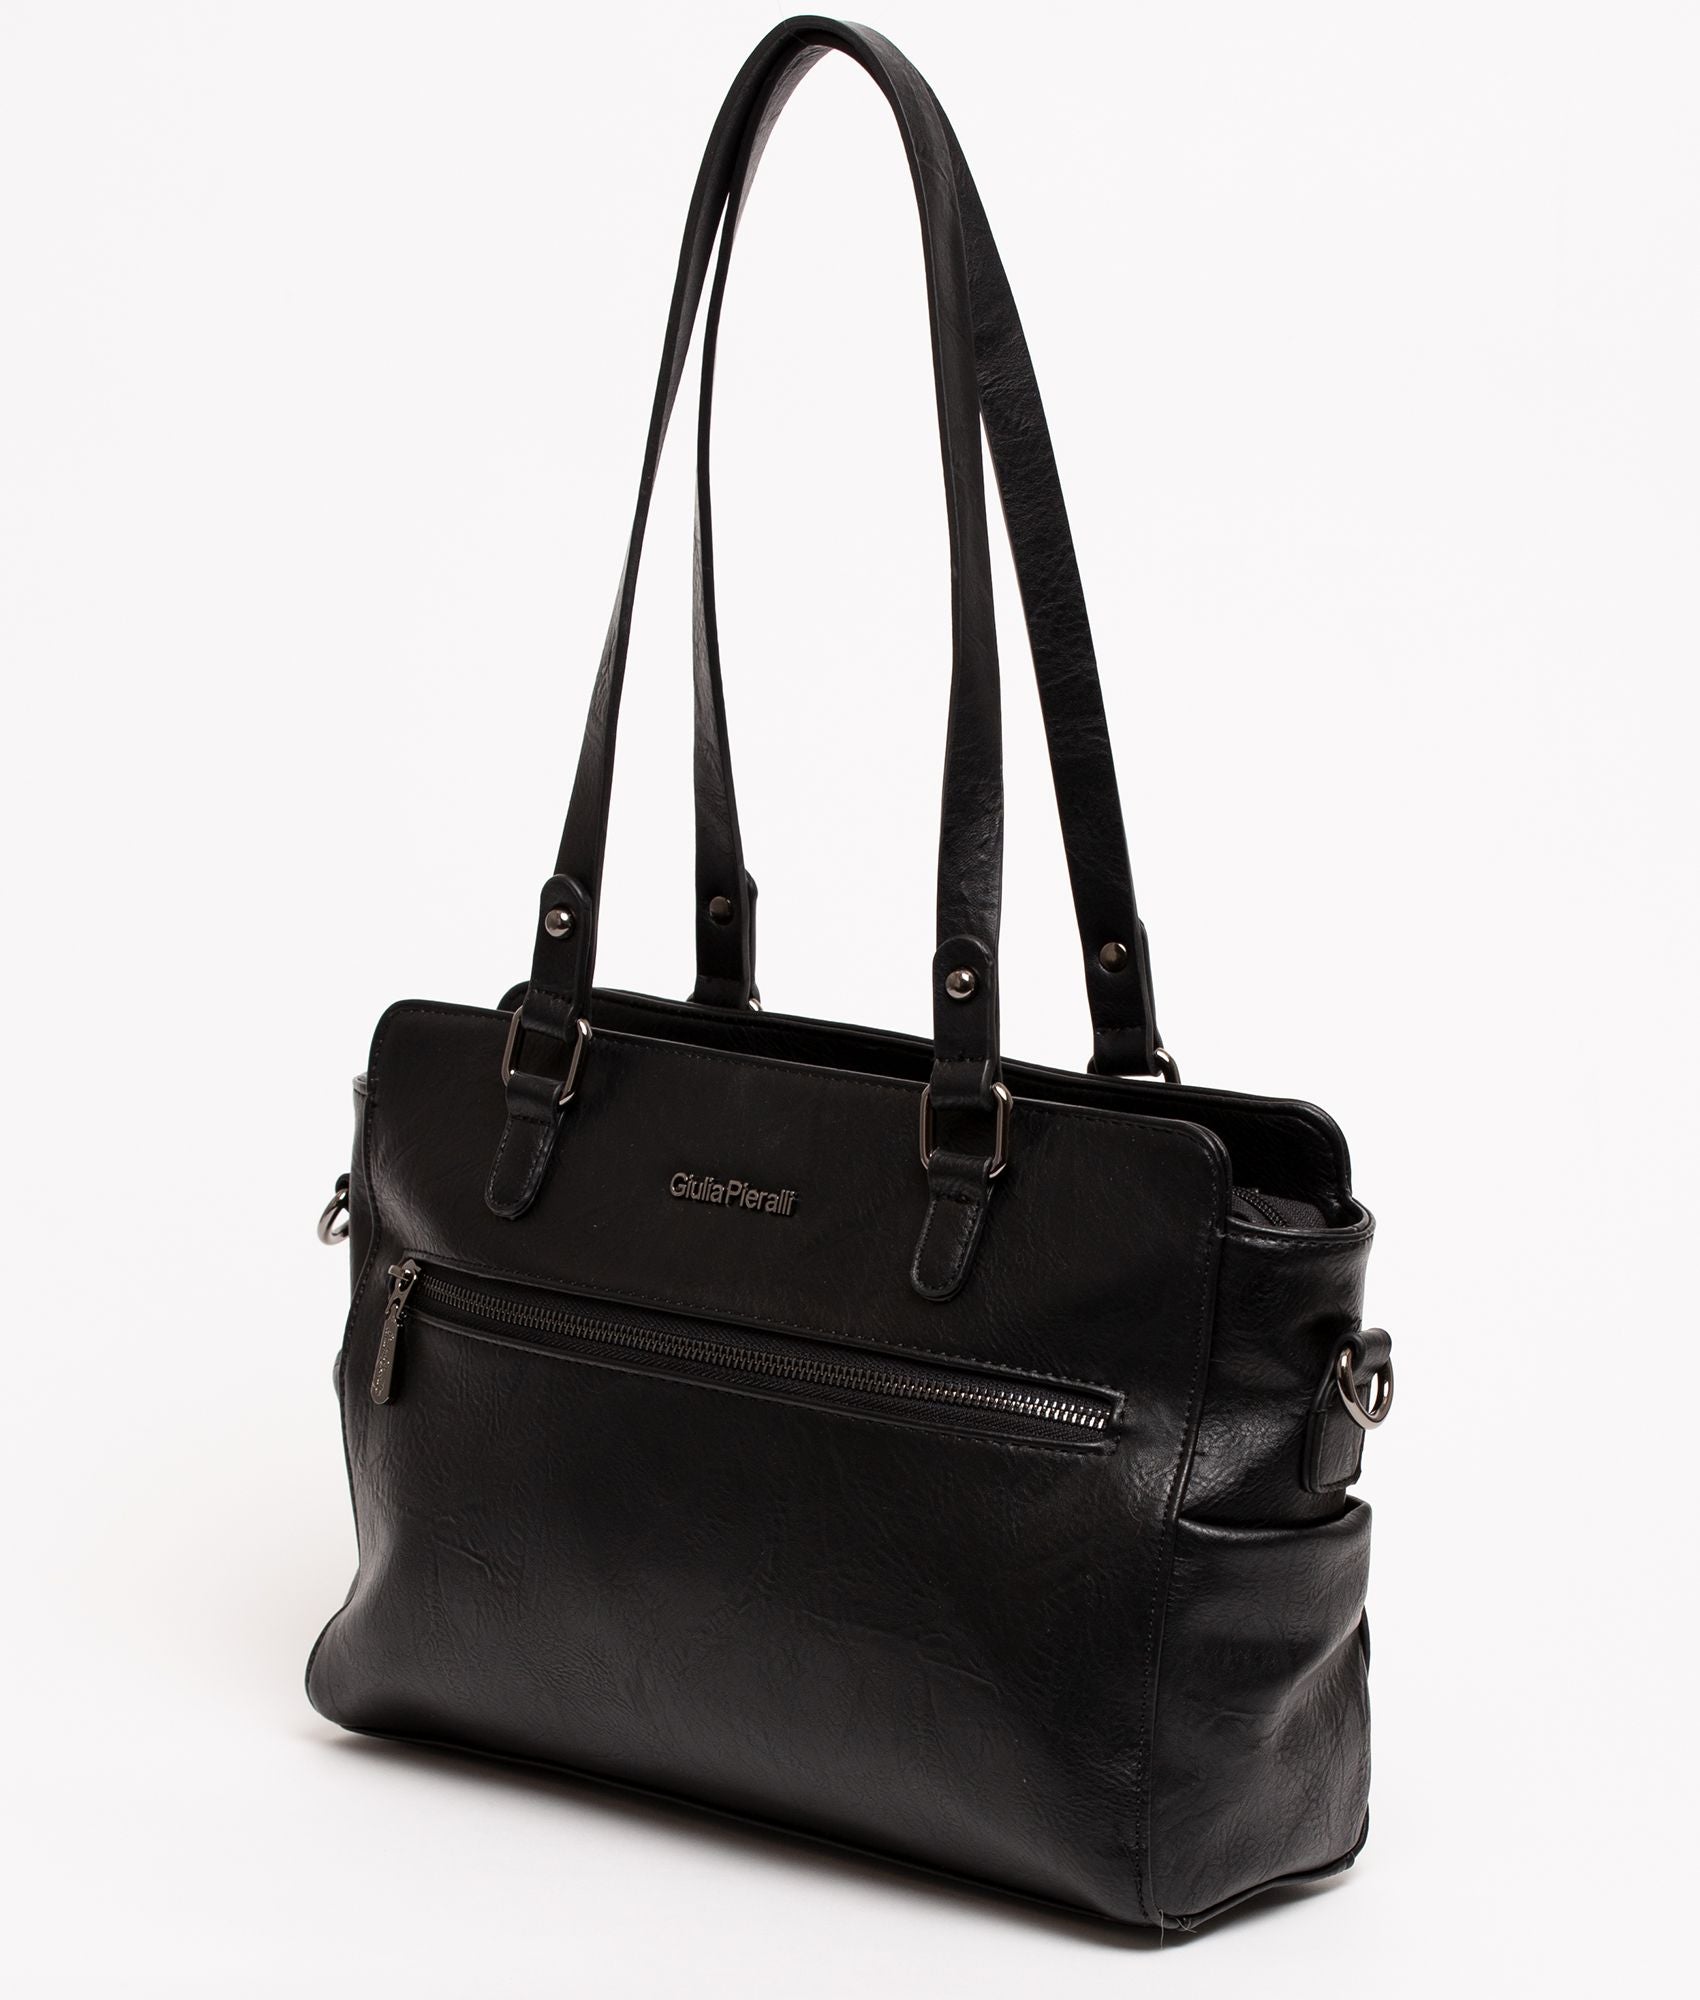 Giulia Pieralli Classic Paketpris Weekendbag & Handbag Black